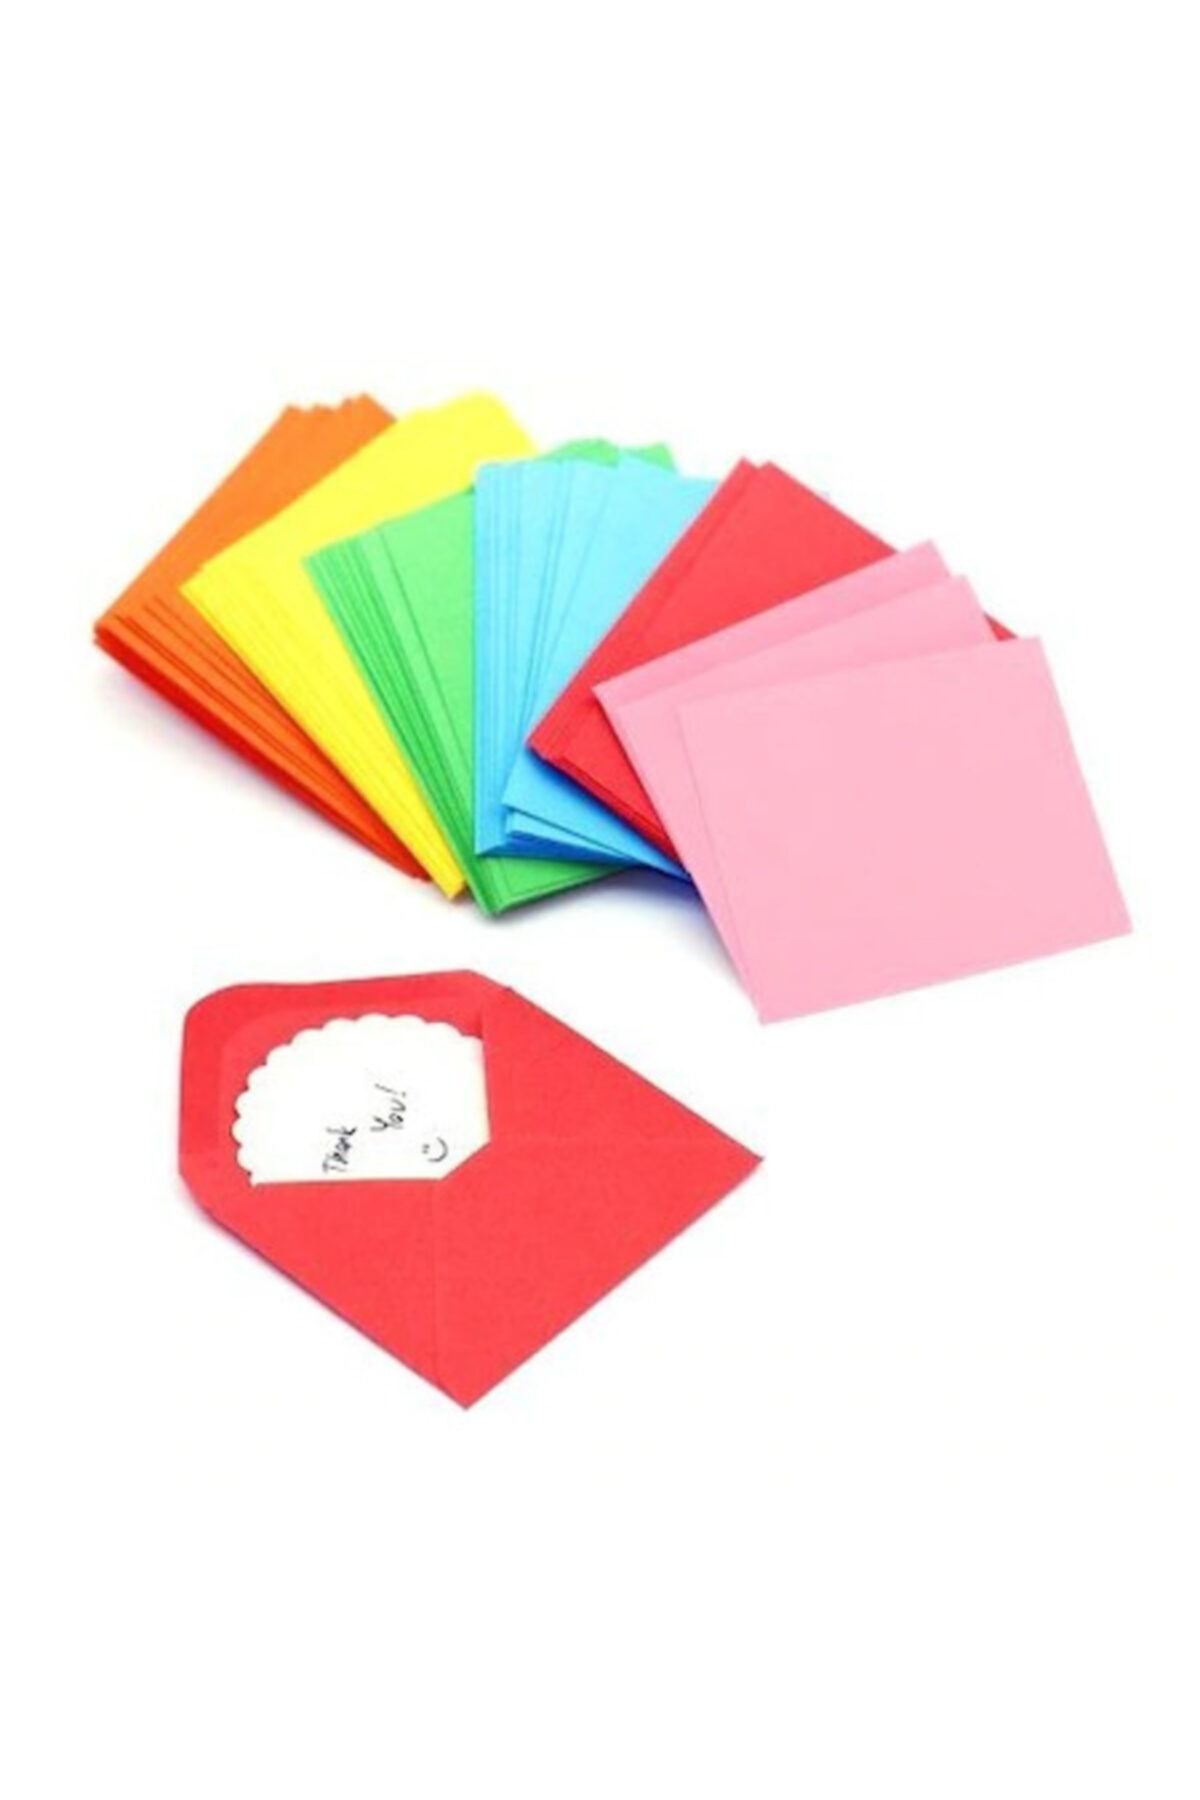 Hobialem Renkli Zarf, 100 Adet, Renkli Mini Zarflar, 7x10 Cm, Karışık Renklerde, Mini Zarf